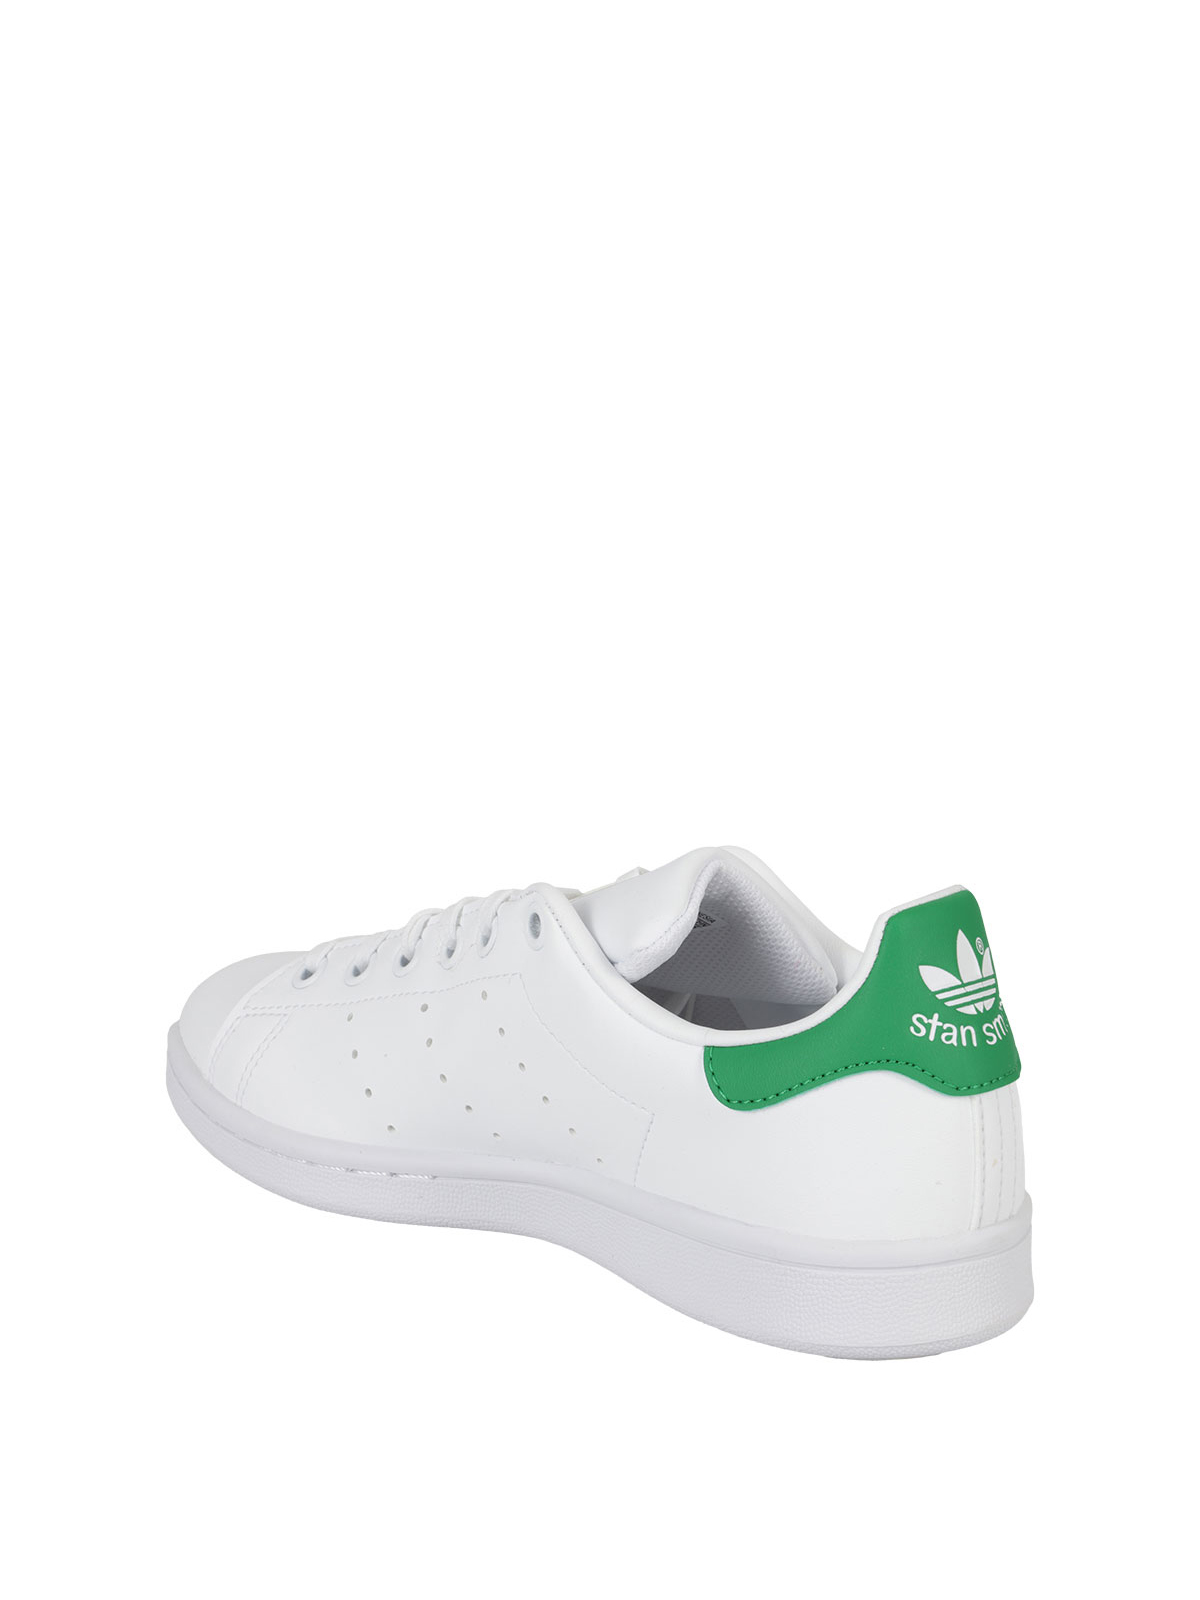 Trainers Adidas Originals - Stan Smith sneakers - FX7519 | iKRIX.com